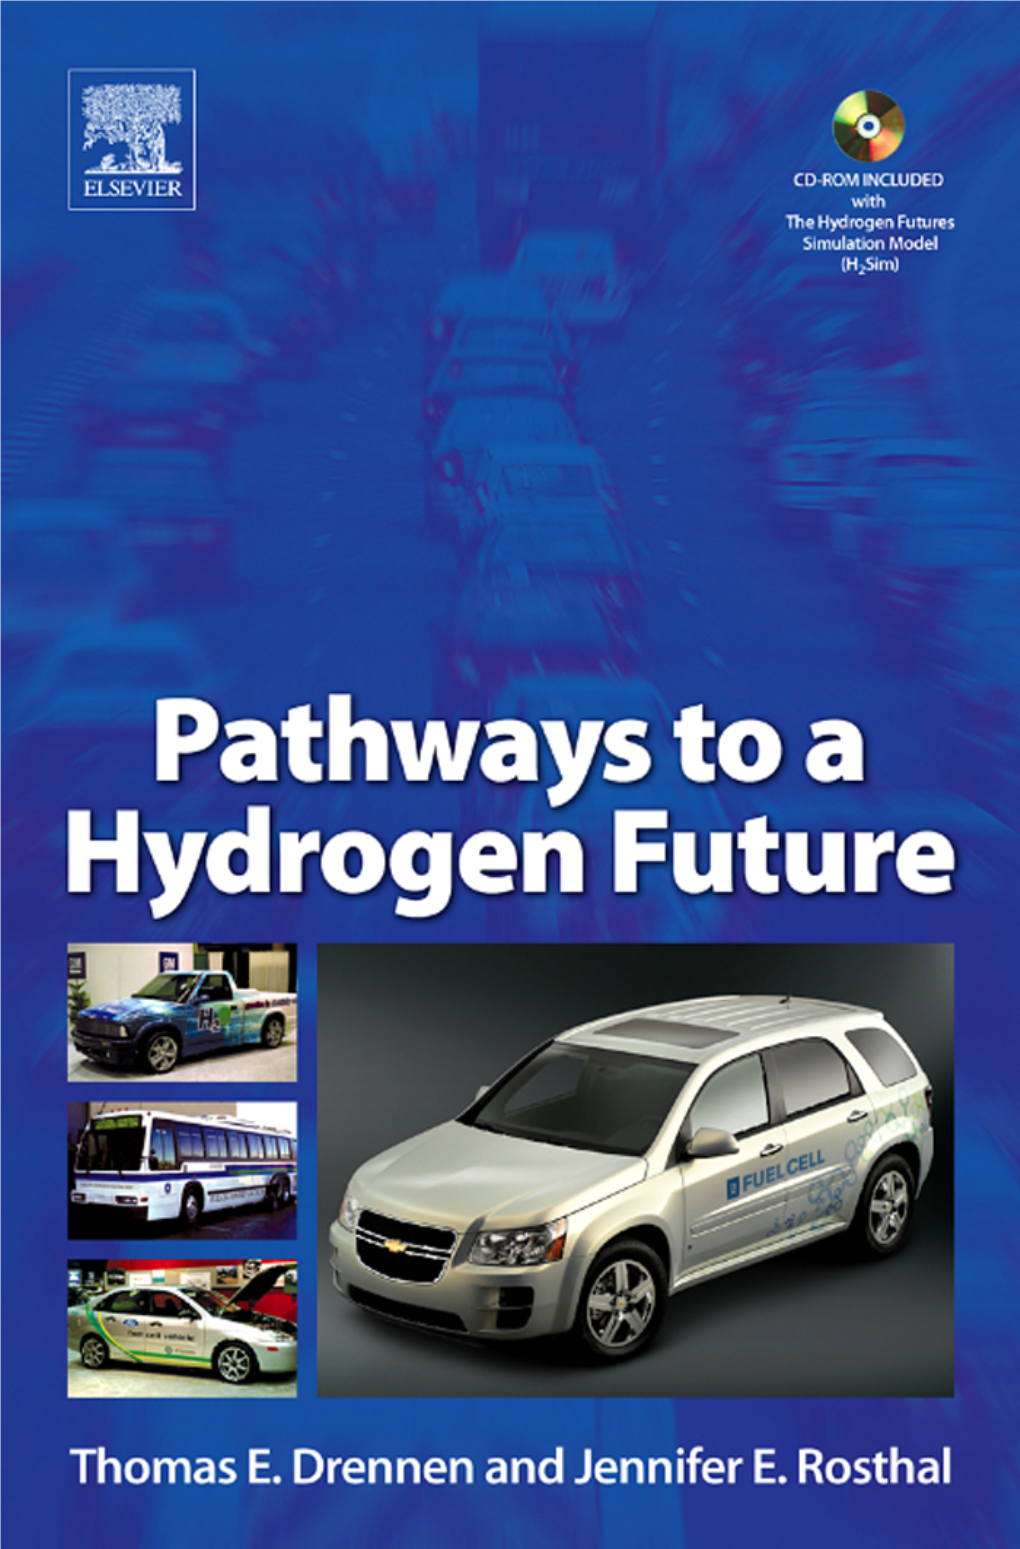 Pathways to a Hydrogen Future